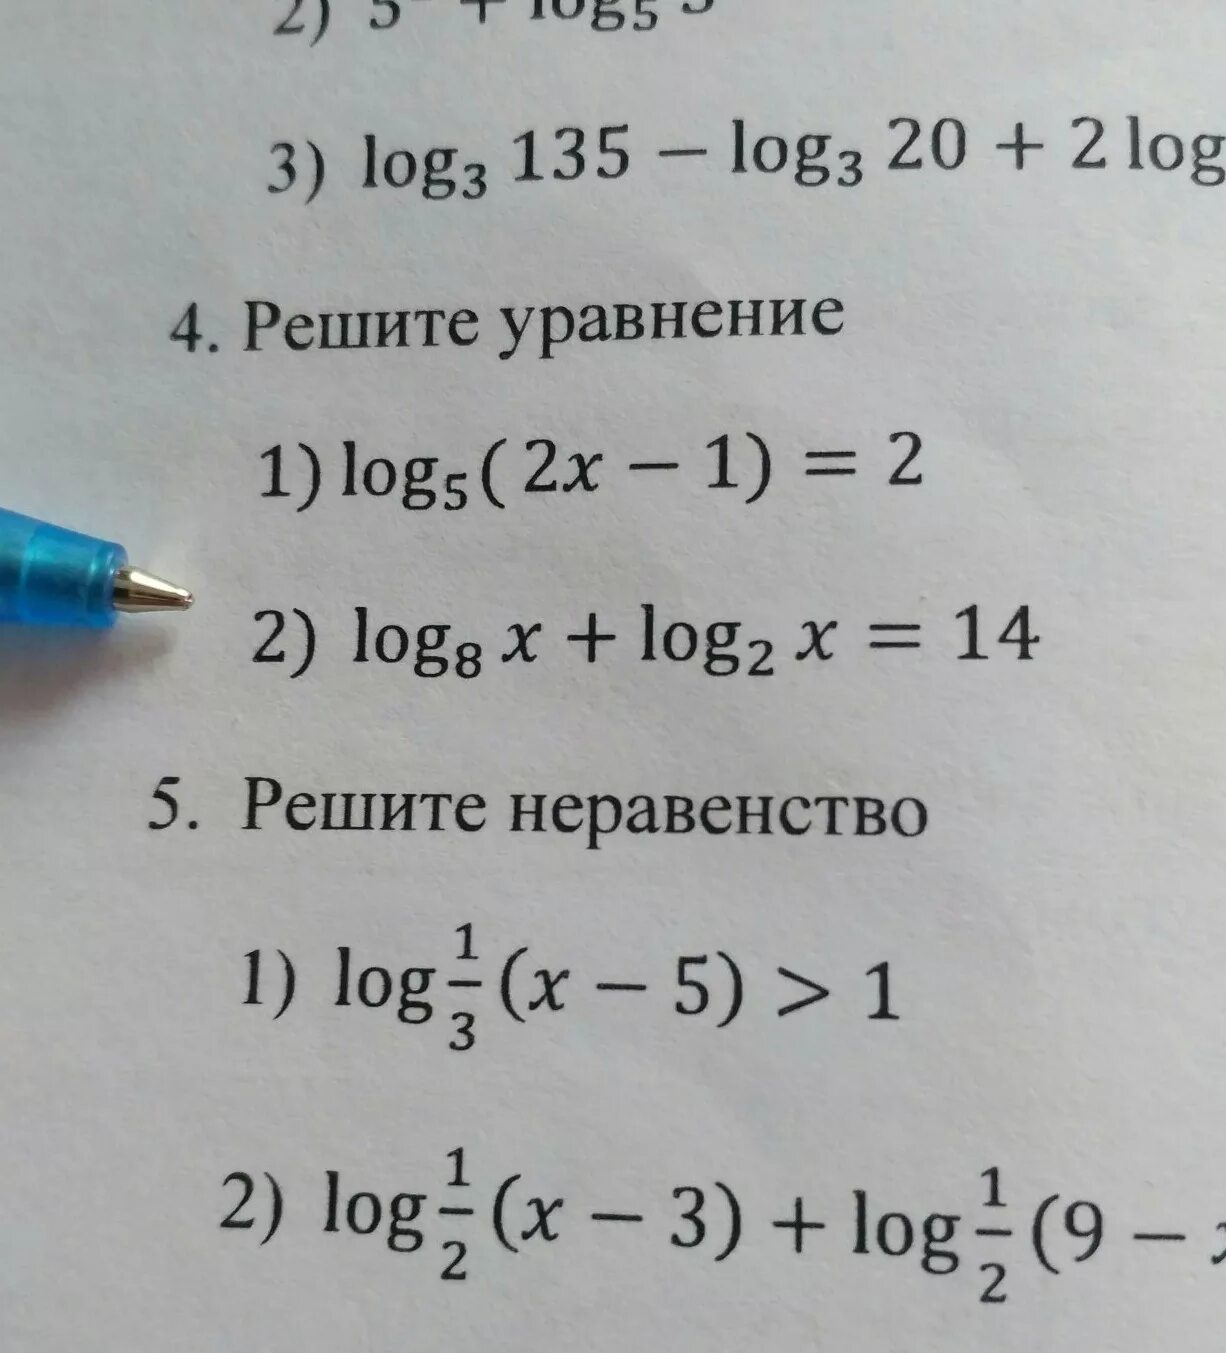 Log2x+log8x 8. X^log2x+2. Решите уравнение log2(x-5)+log2(x+2)=3. Log^2 2 (x^2). Log8 log 2